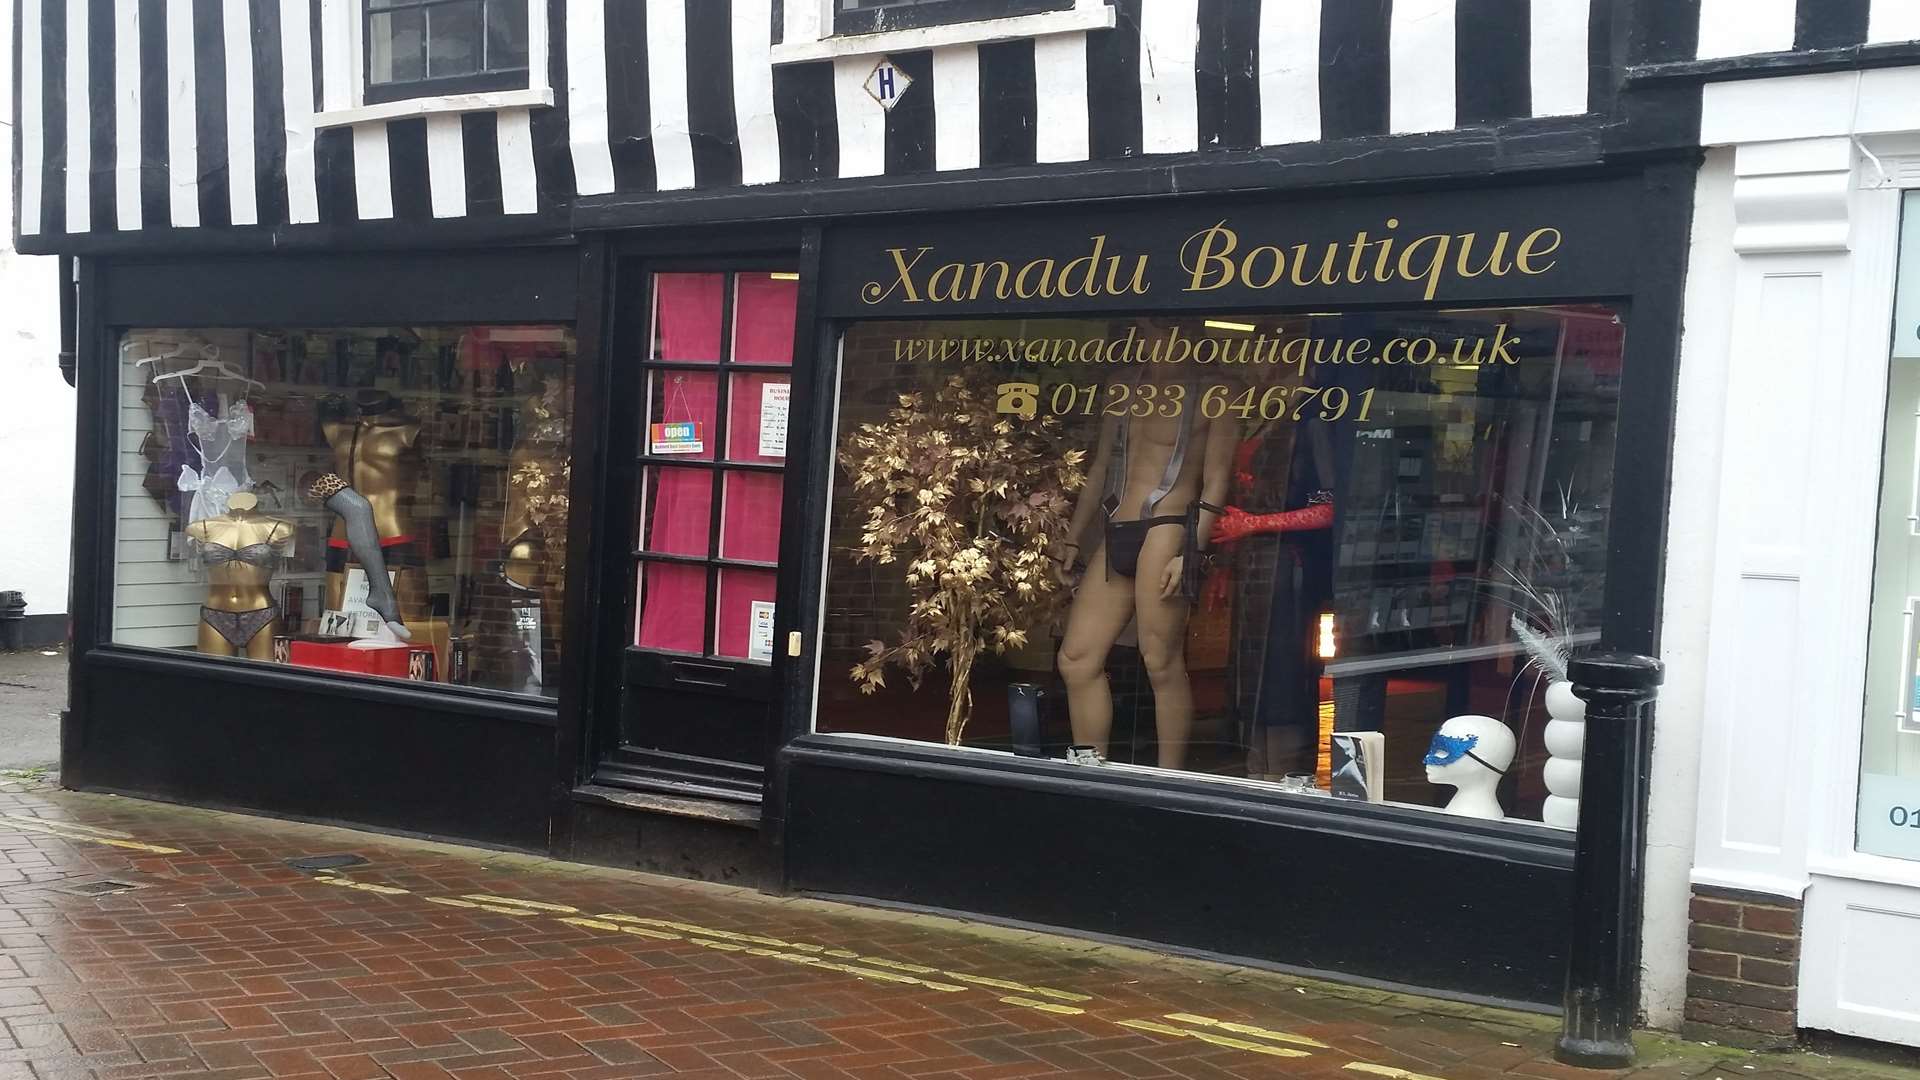 Xanadu Boutique is in Ashford's High Street